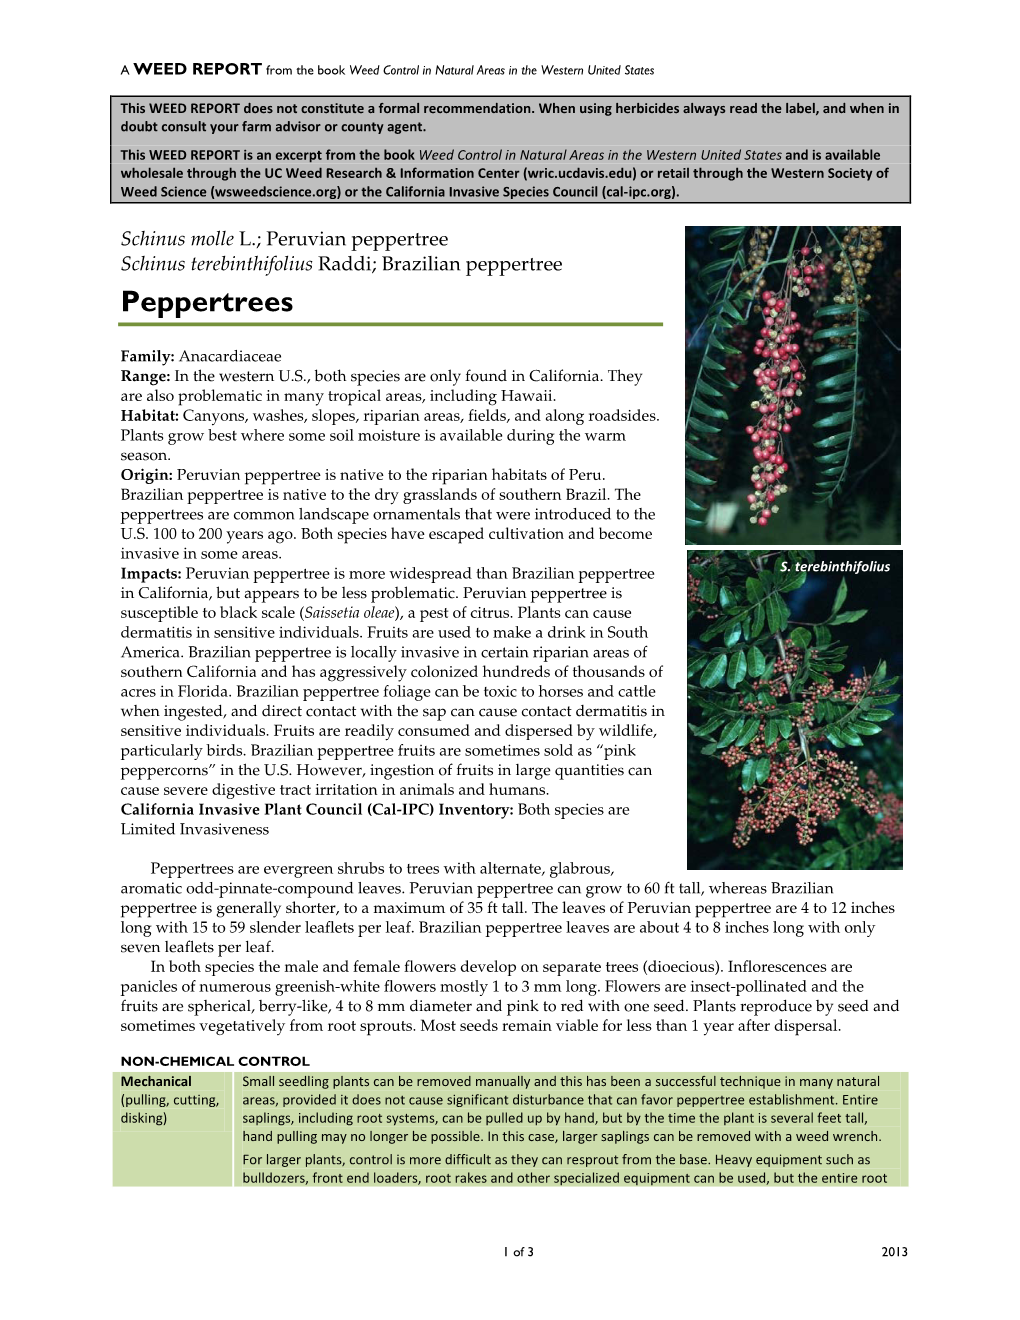 Schinus Molle L.; Peruvian Peppertree Schinus Terebinthifolius Raddi; Brazilian Peppertree Peppertrees